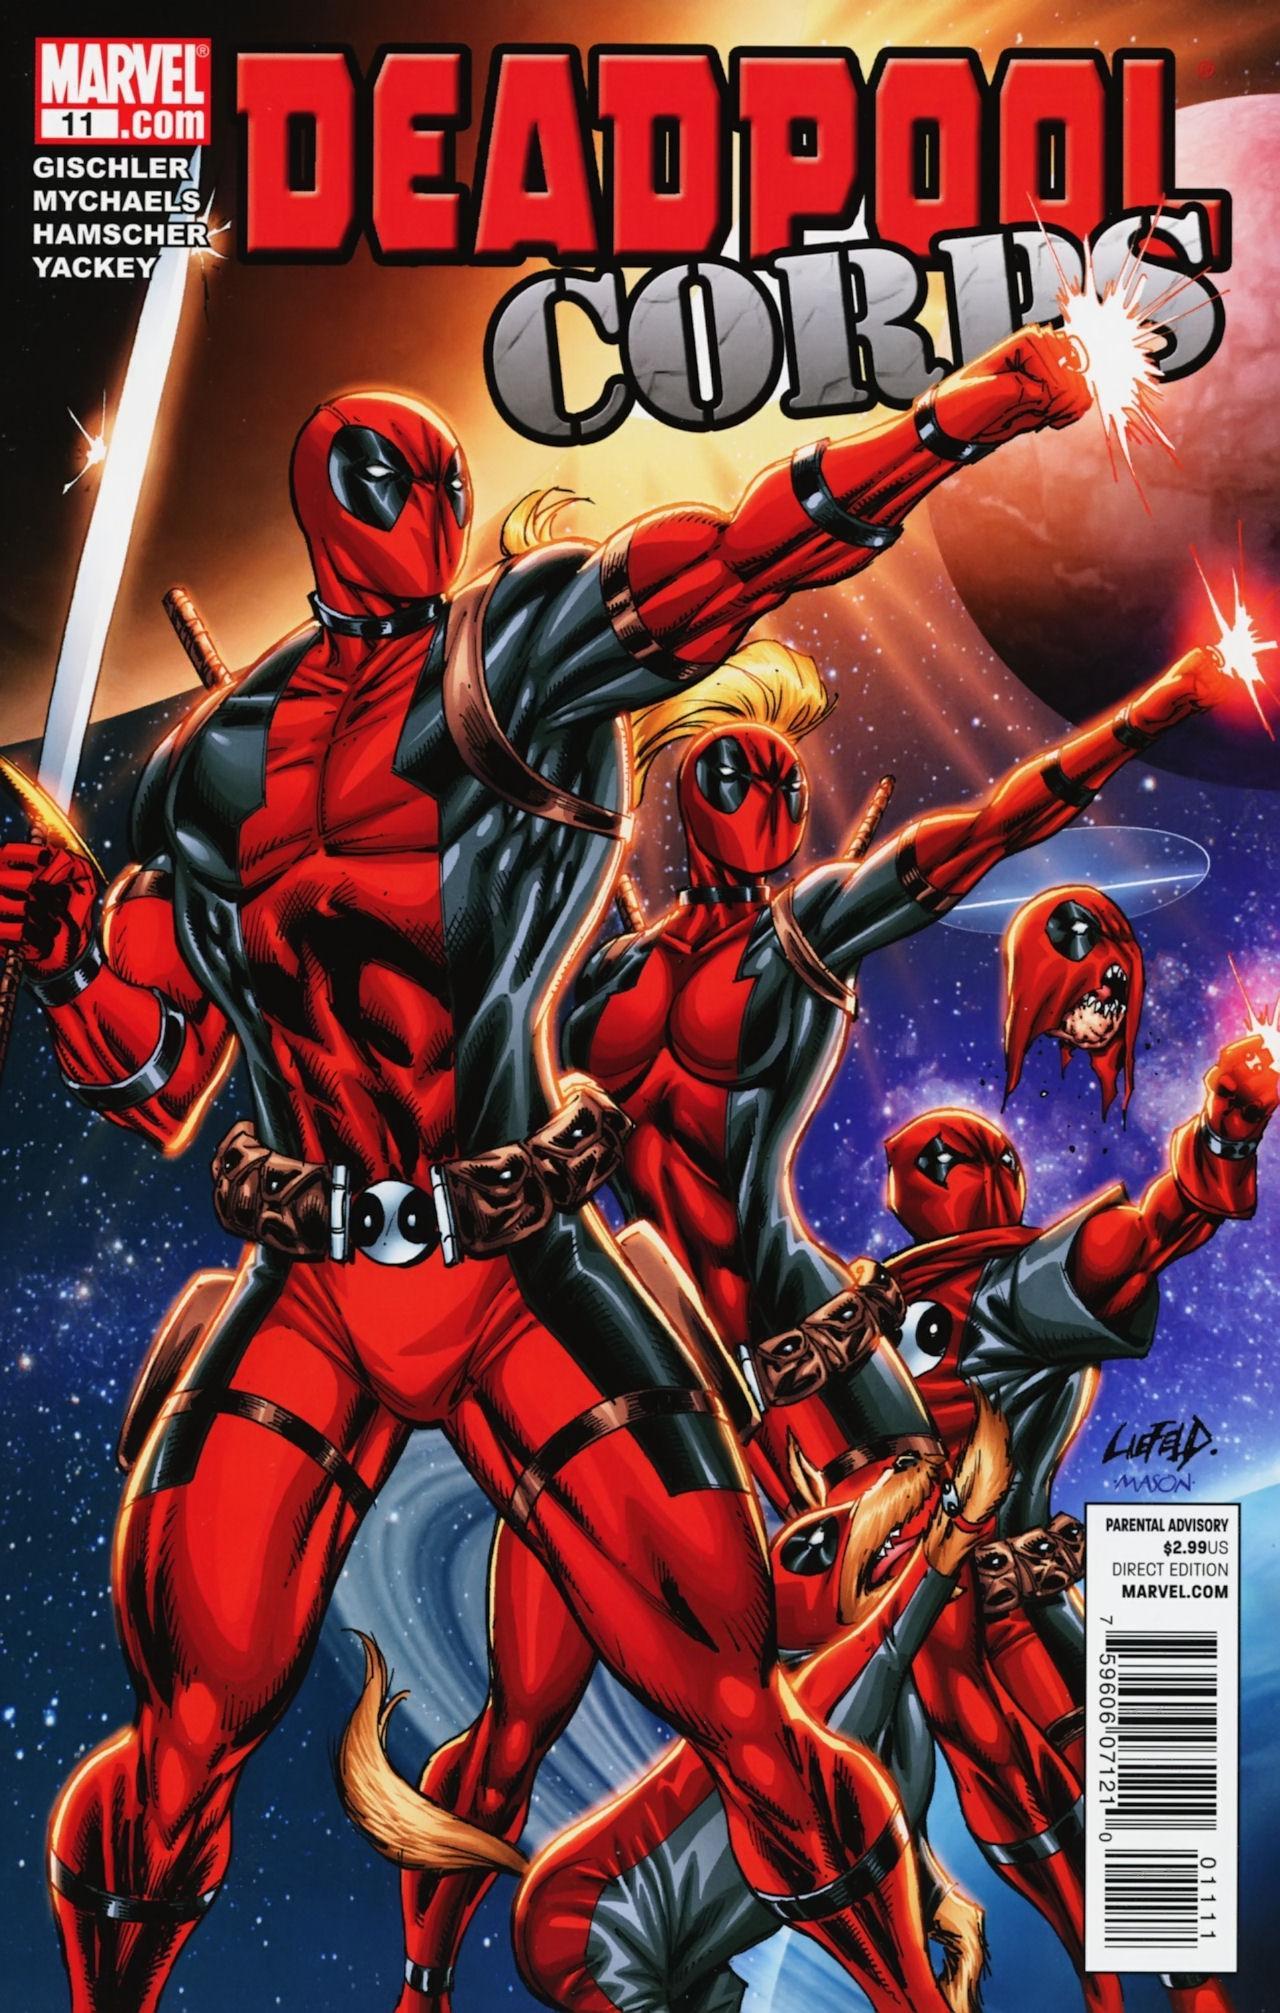 Deadpool Corps Vol. 1 #11